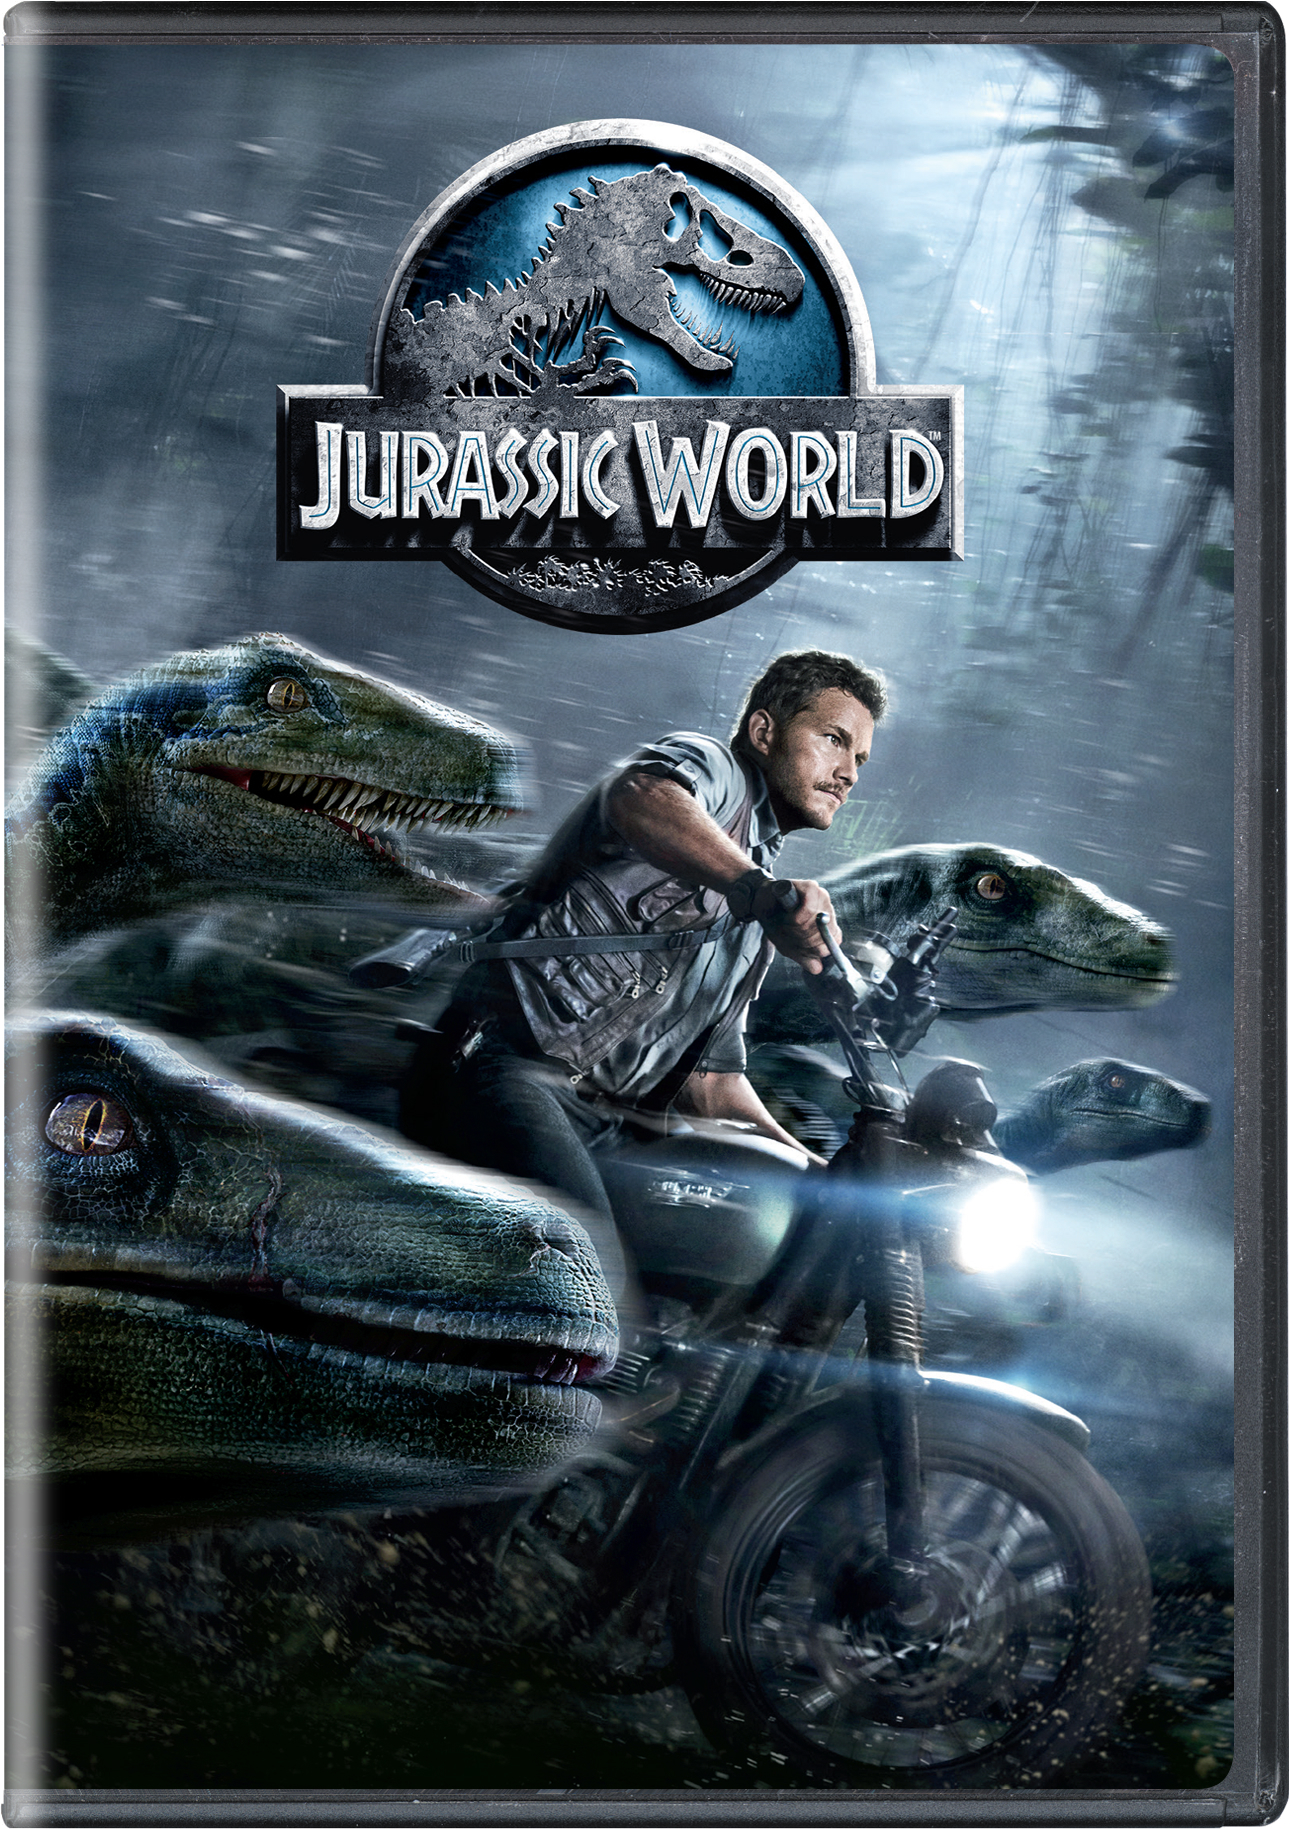 Jurassic World - DVD [ 2015 ]  - Adventure Movies On DVD - Movies On GRUV